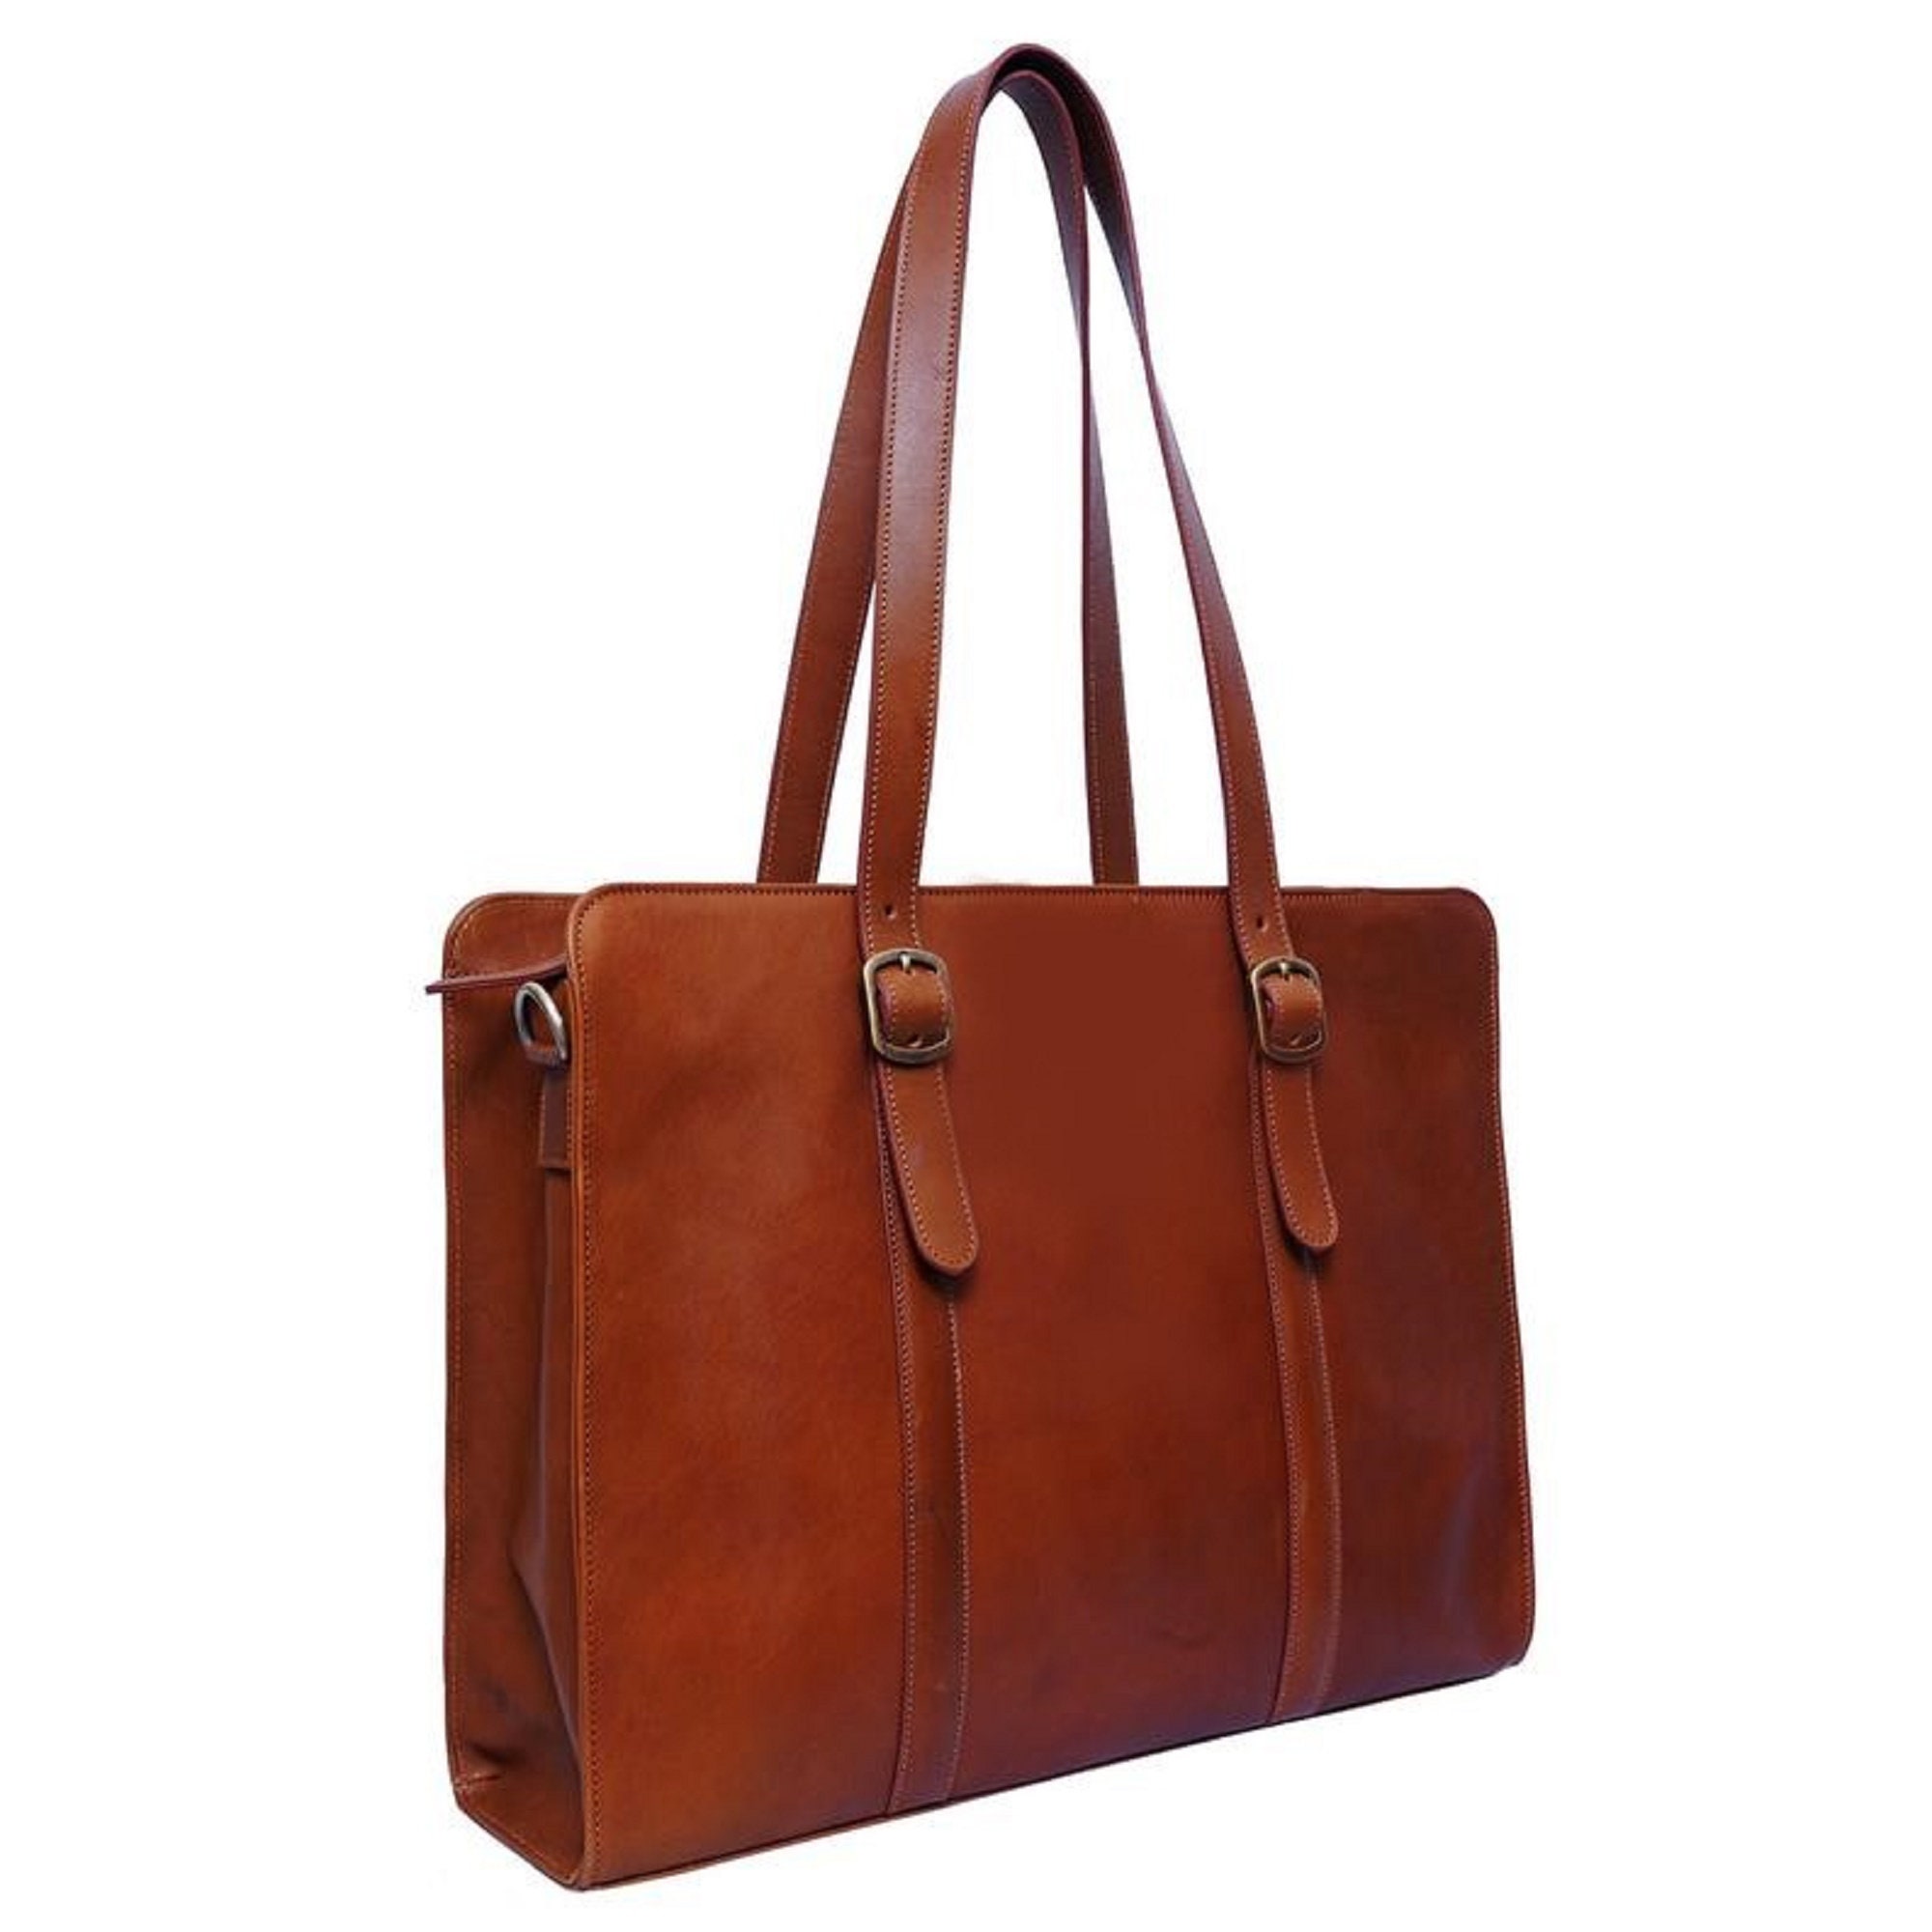 Pexas women's Genuine leather shoulder bags Ladies laptop | Etsy